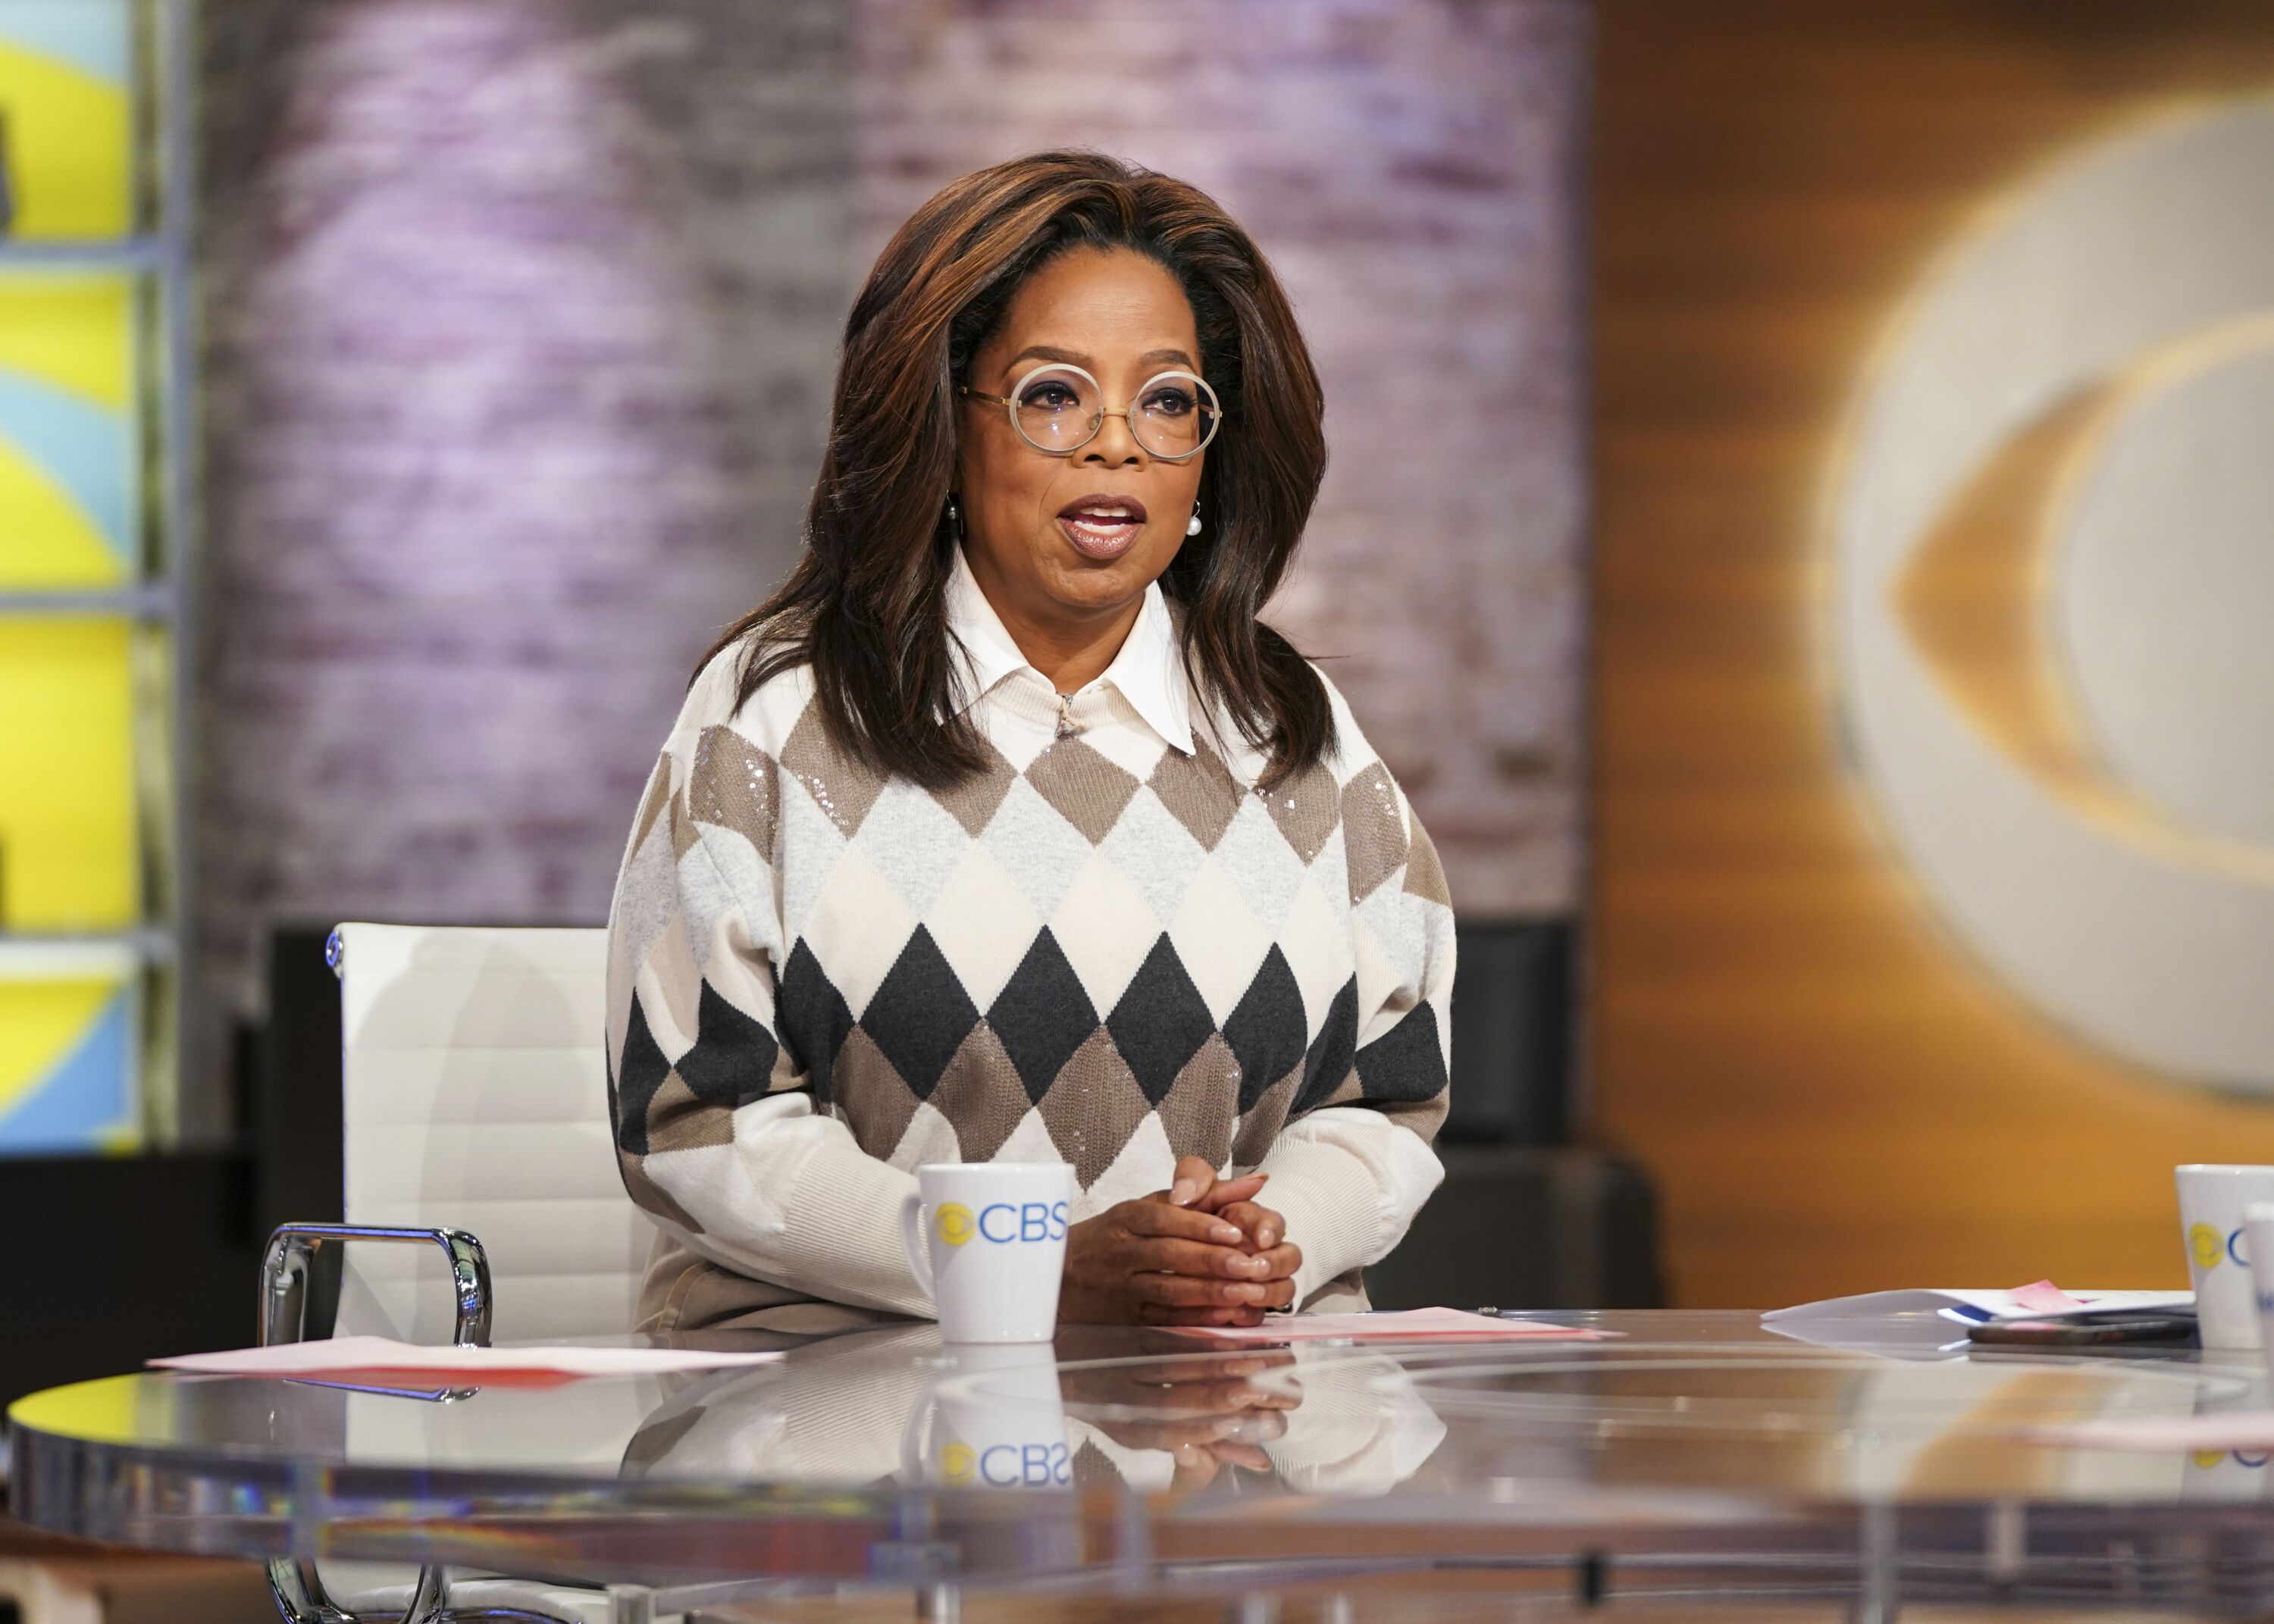 Oprah Winfrey on set at the CBS network | Source: Getty Images/GlobalImagesUkraine